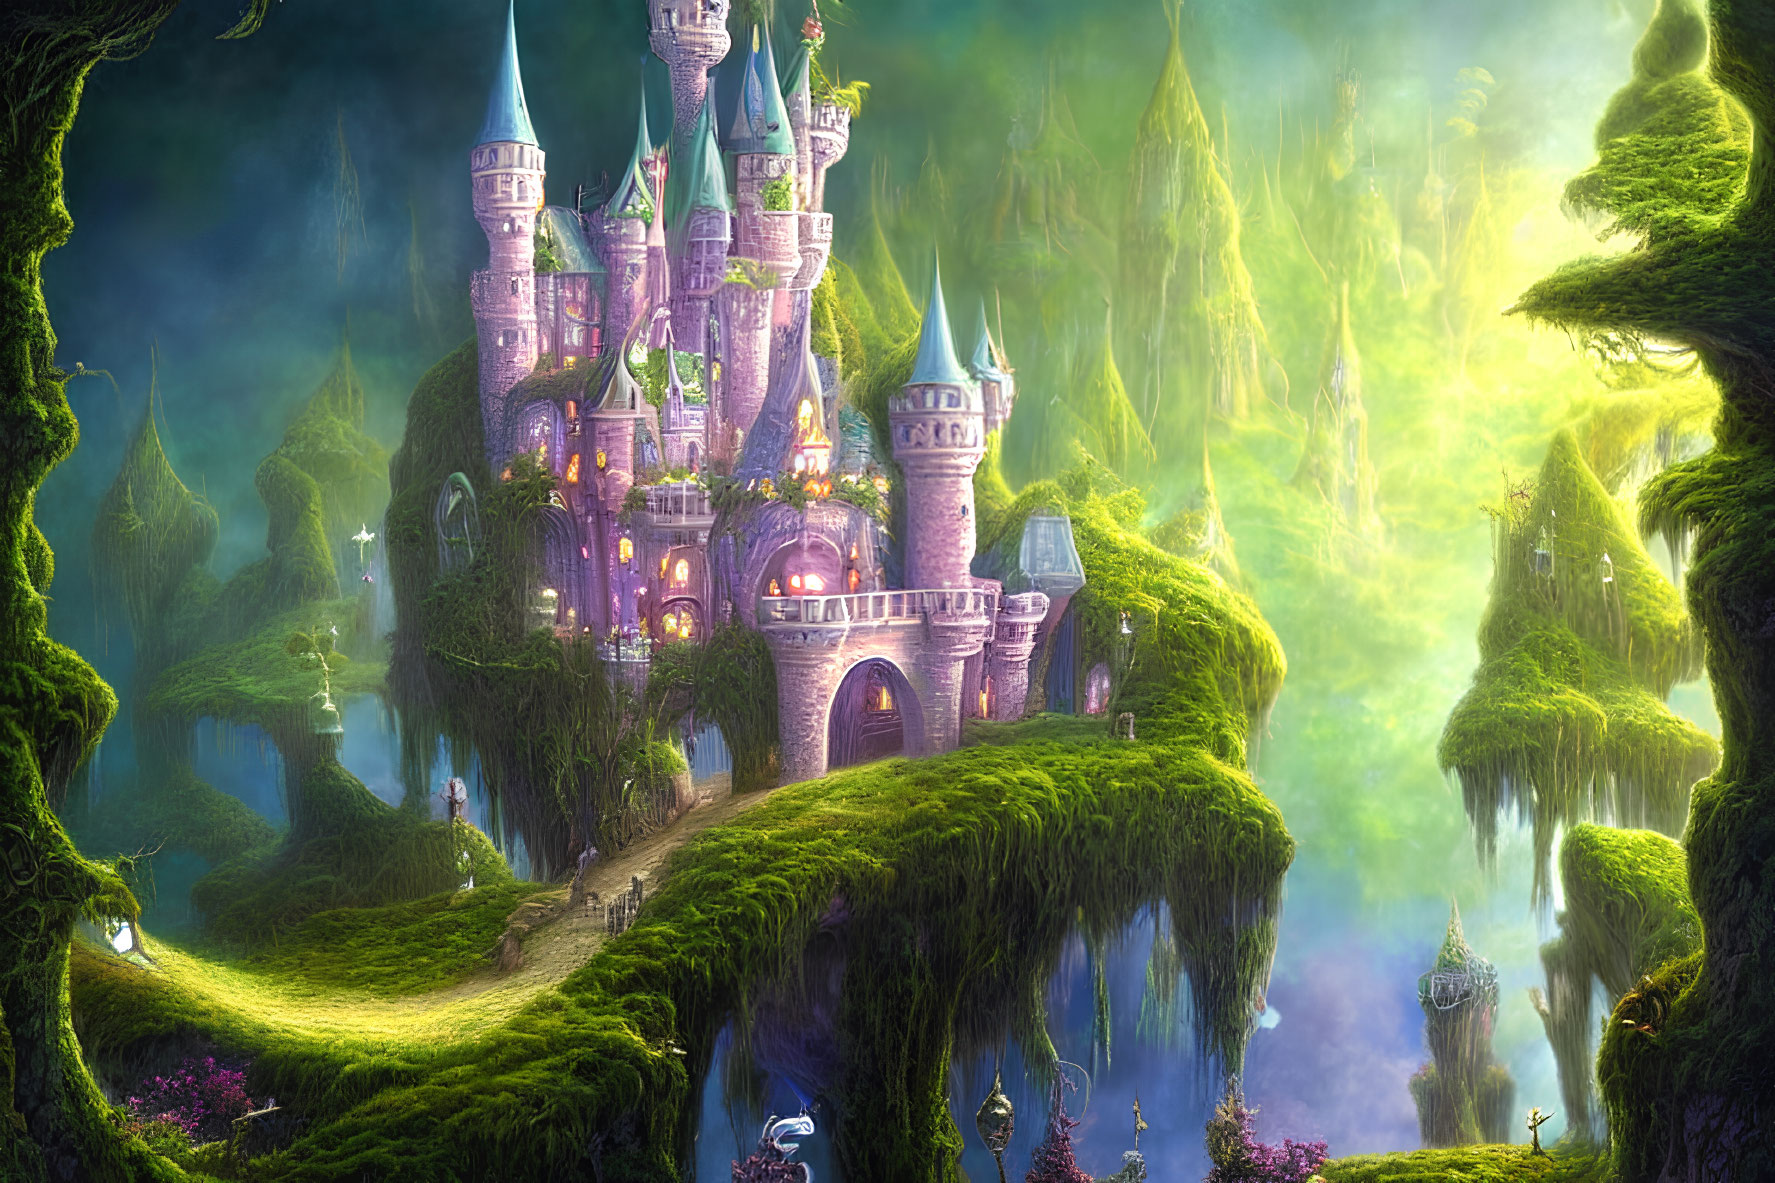 Enchanting castle in lush greenery and mystical fog